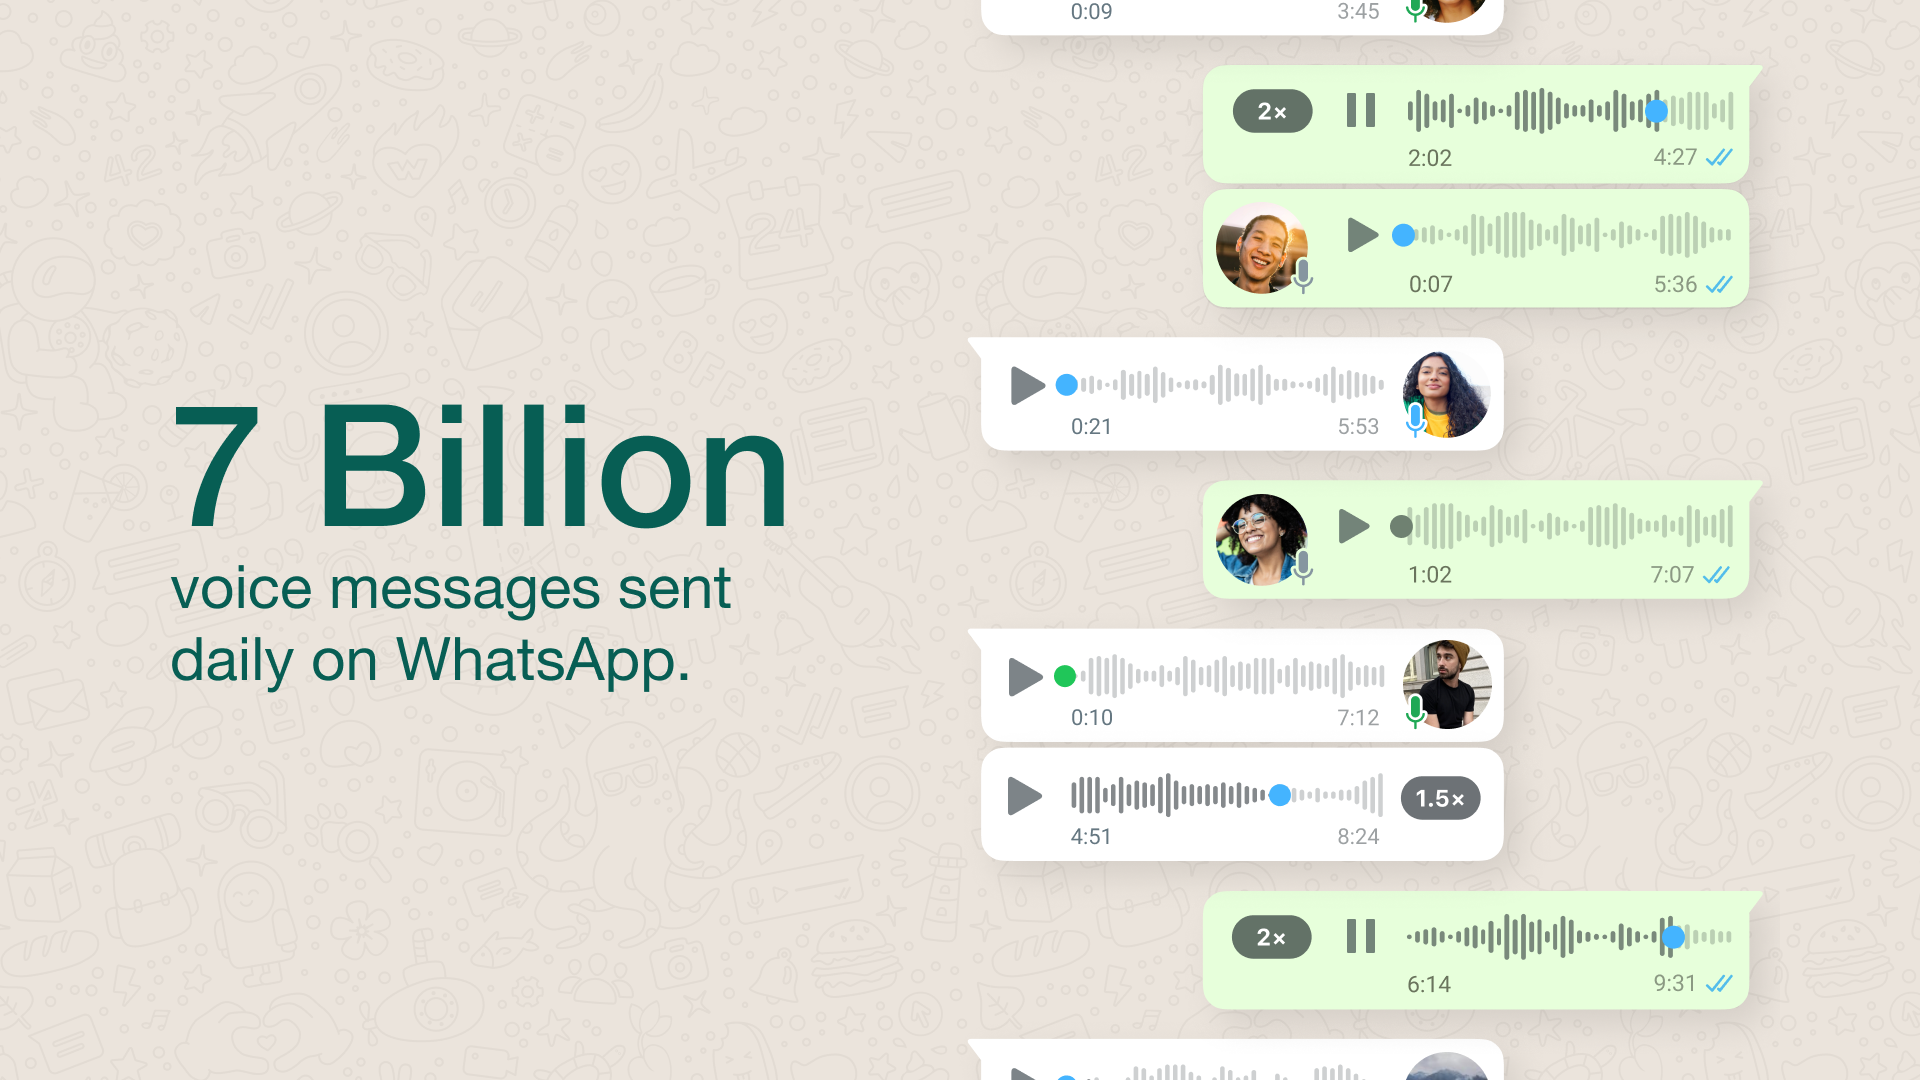 WhatsApp voice messaging